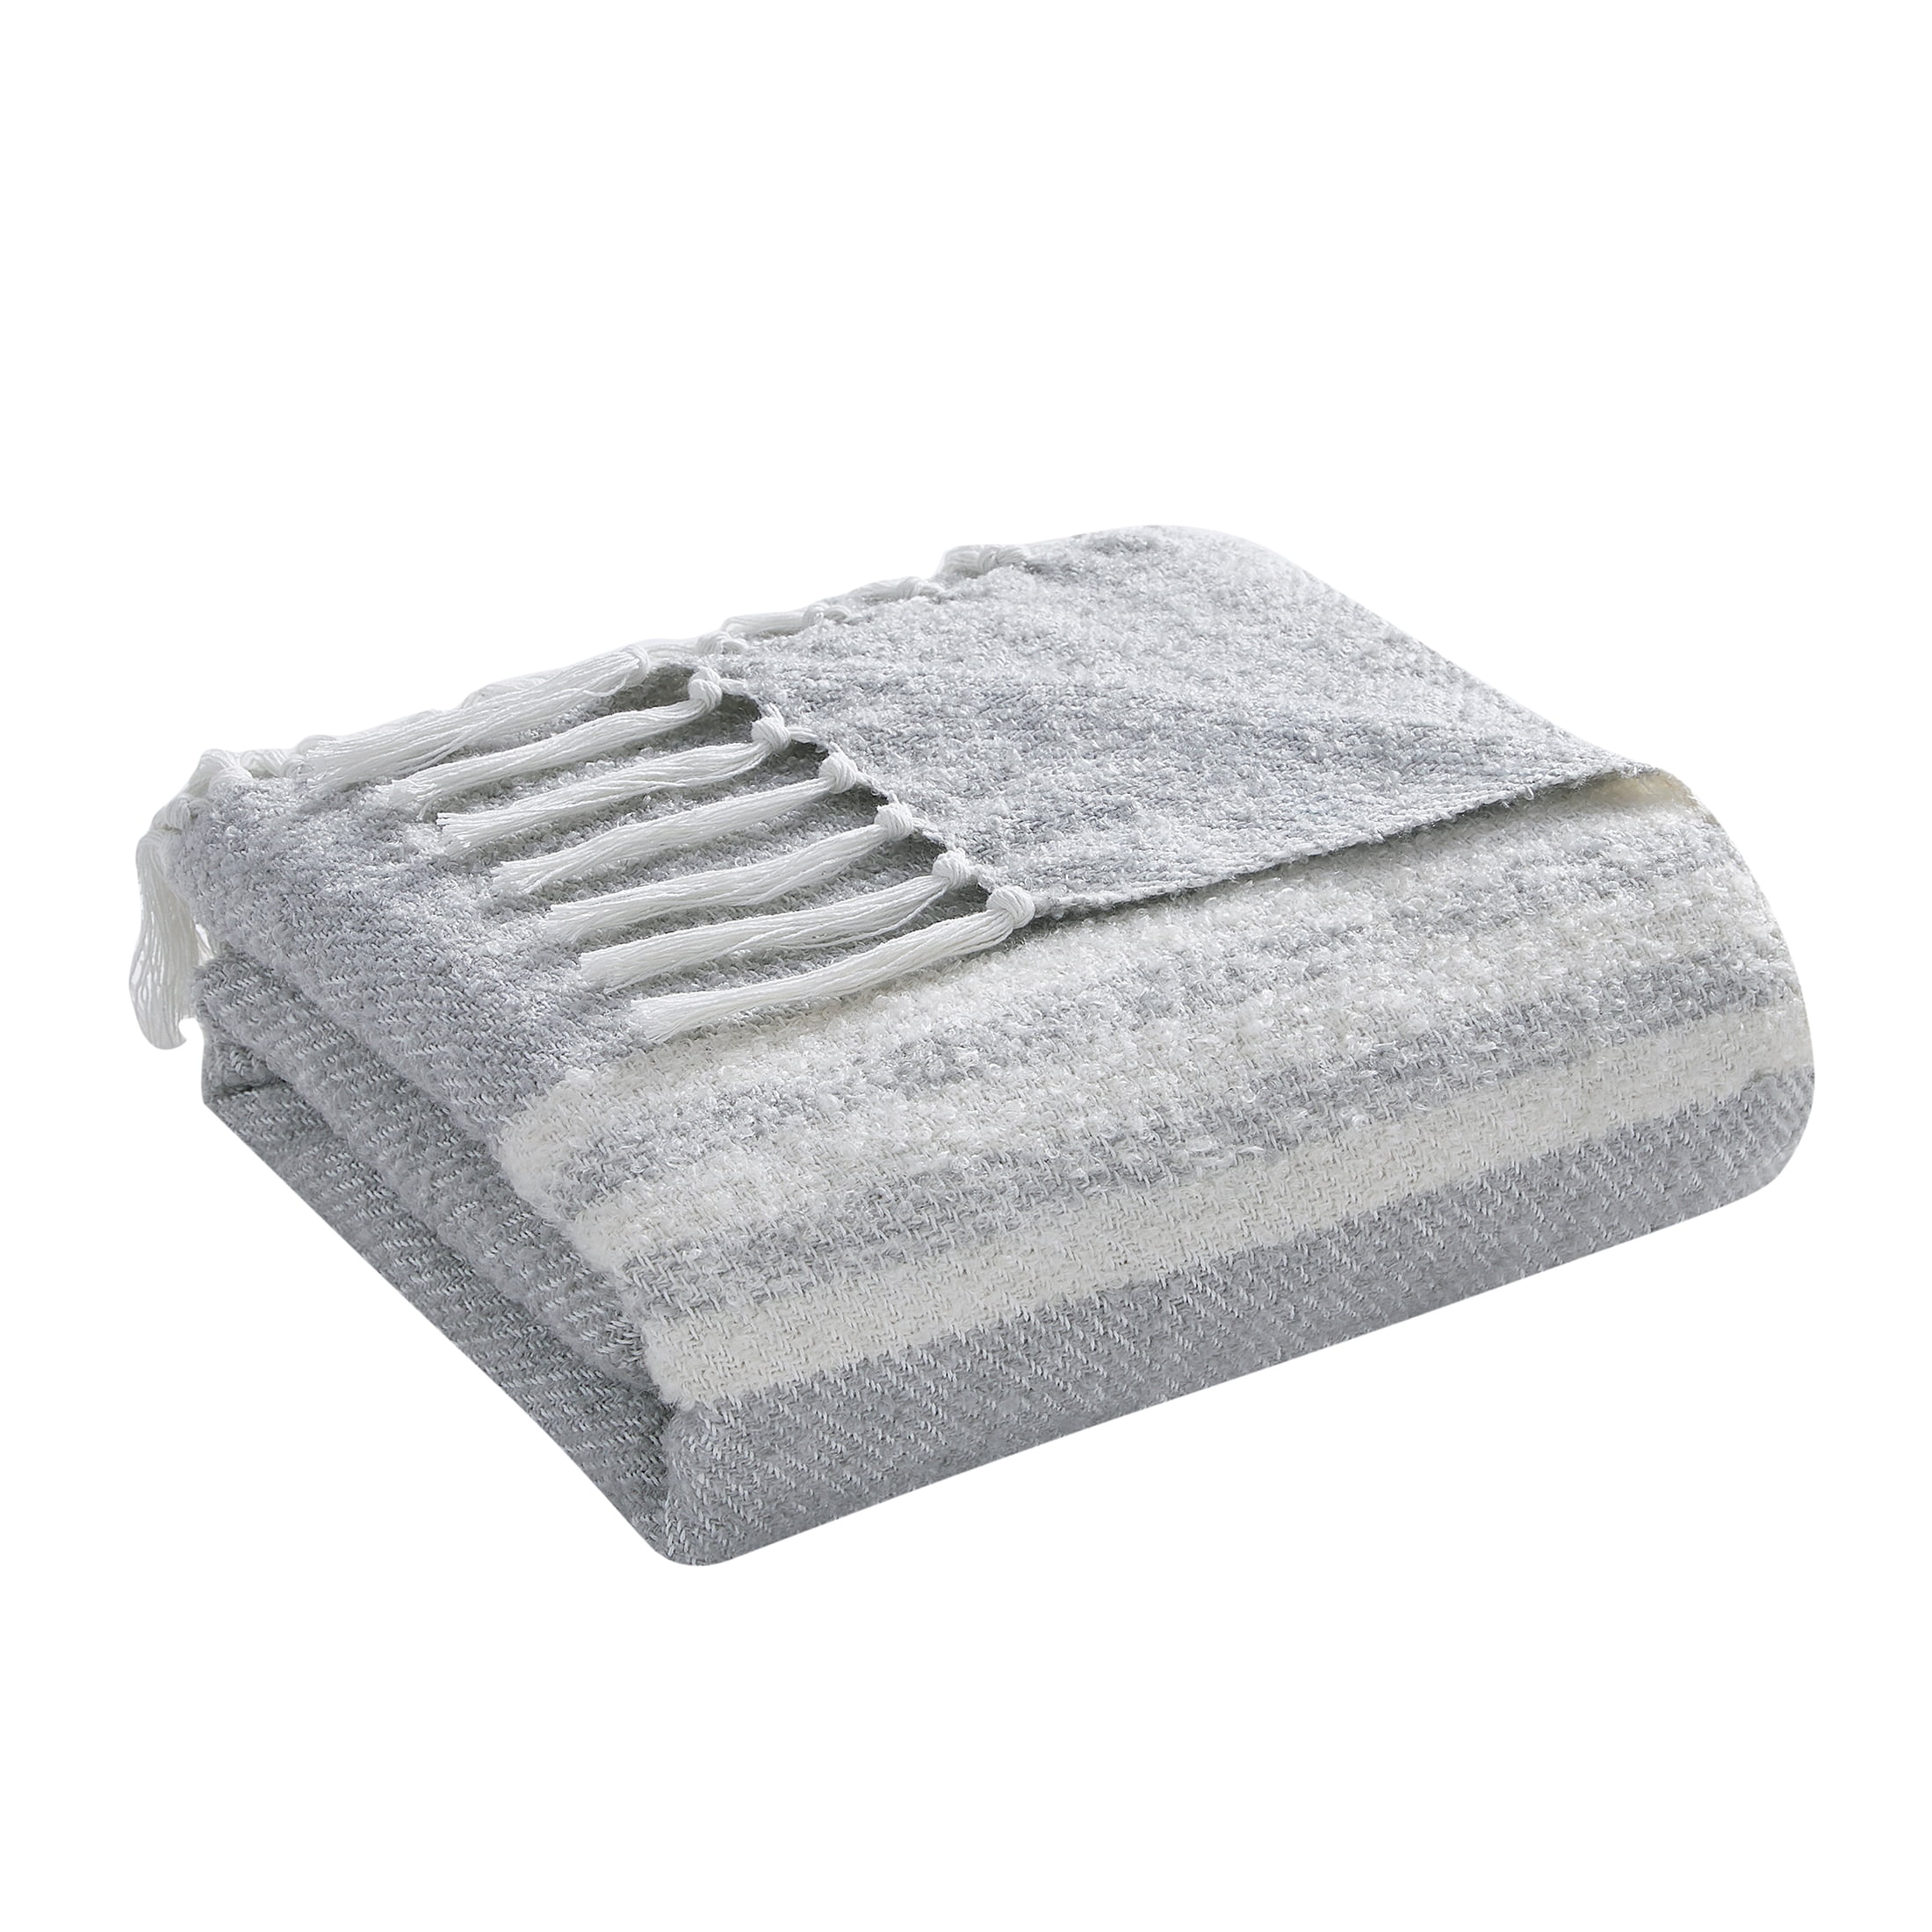 Luxury Thermal Cotton Blankets, King Size- White - Walmart.com